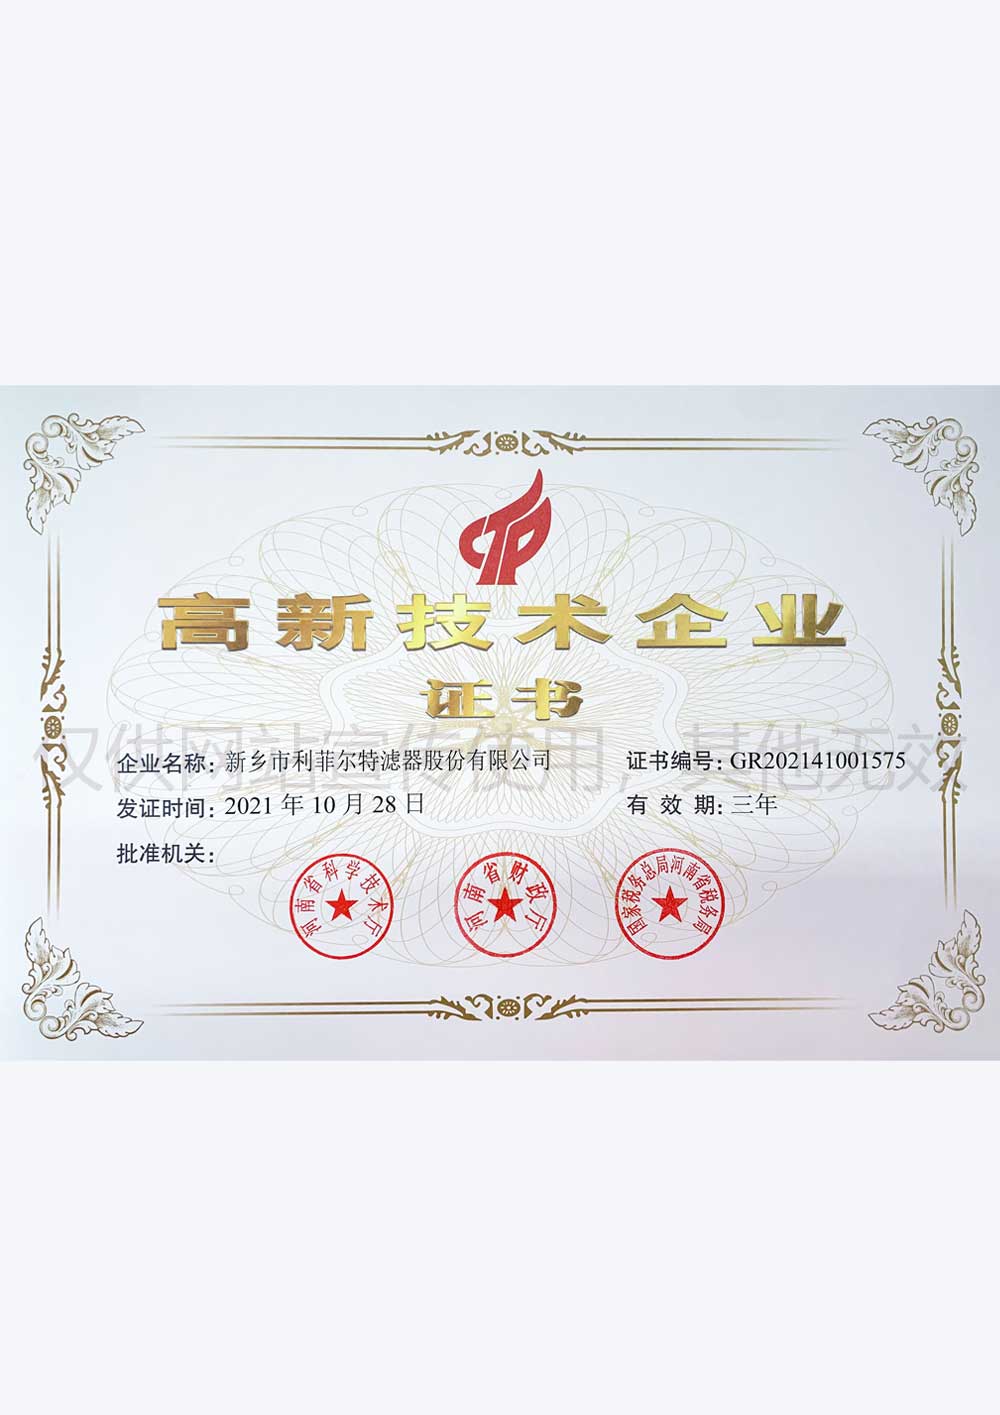 Honorary certificate: high-tech enterprise certificate